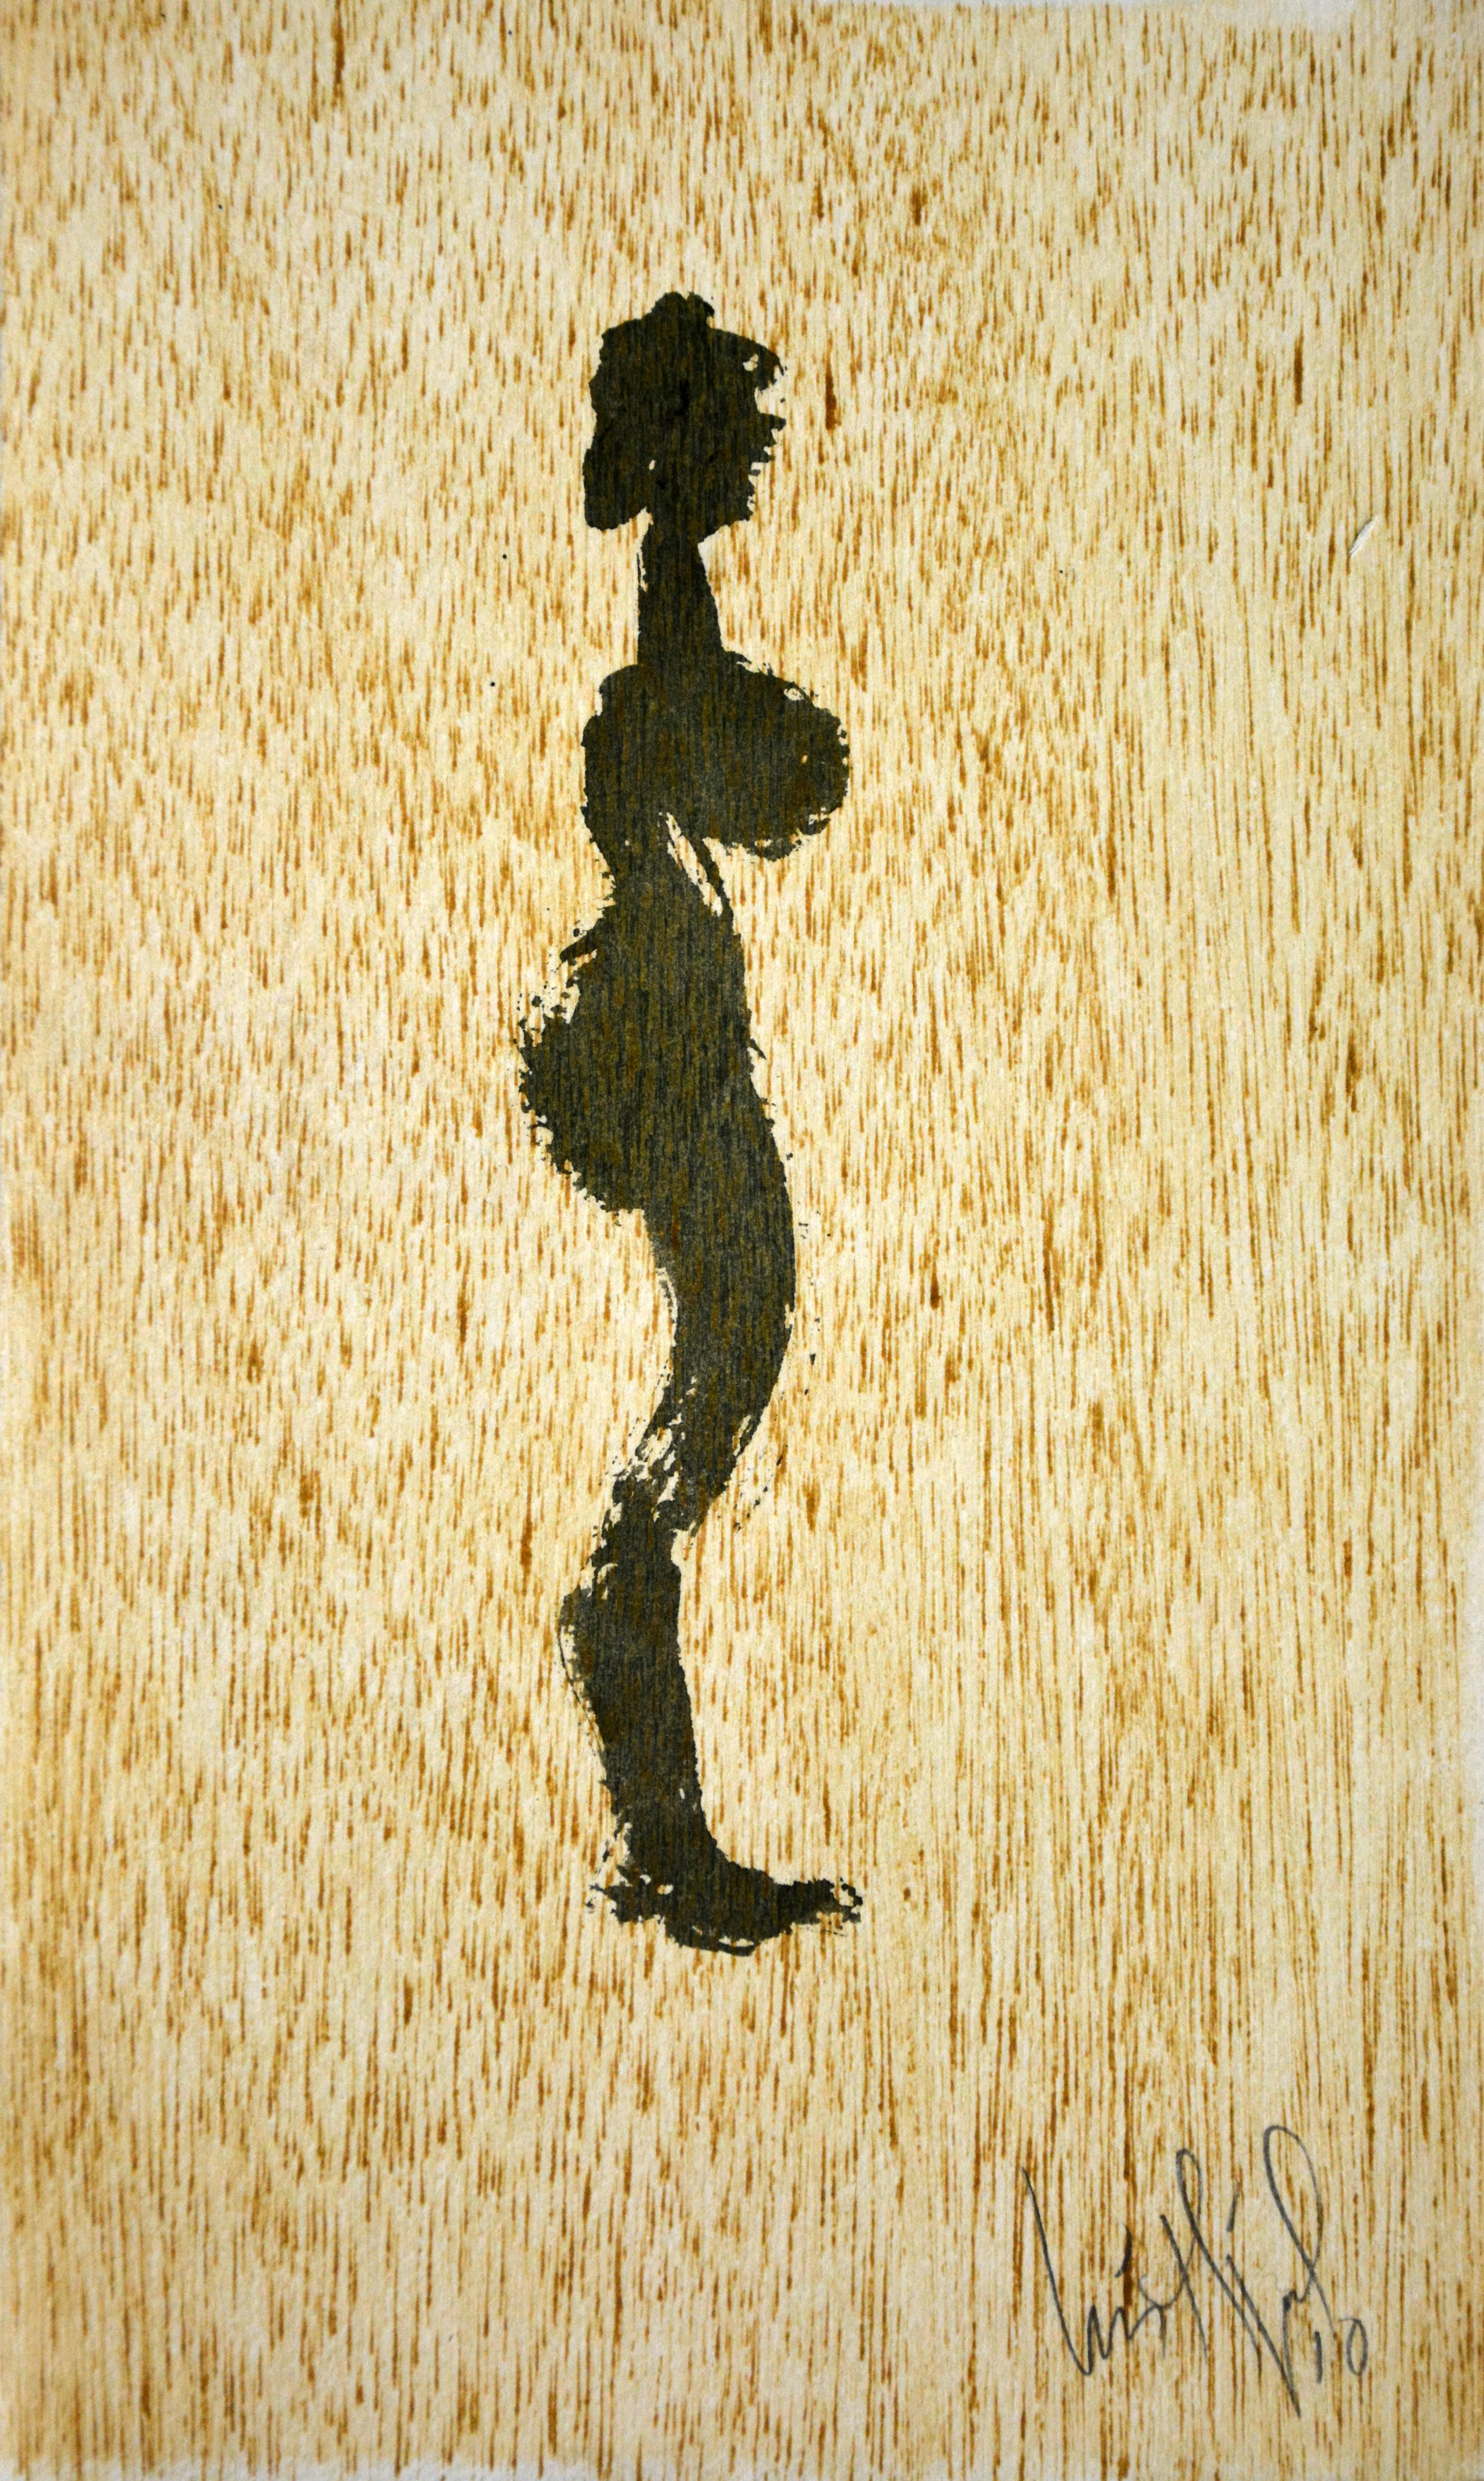 Luis Miguel Valdes, ¨Pefil-1¨, 2010, Work on paper, 12.2x7.4 in - Art by Luis Miguel Valdes 